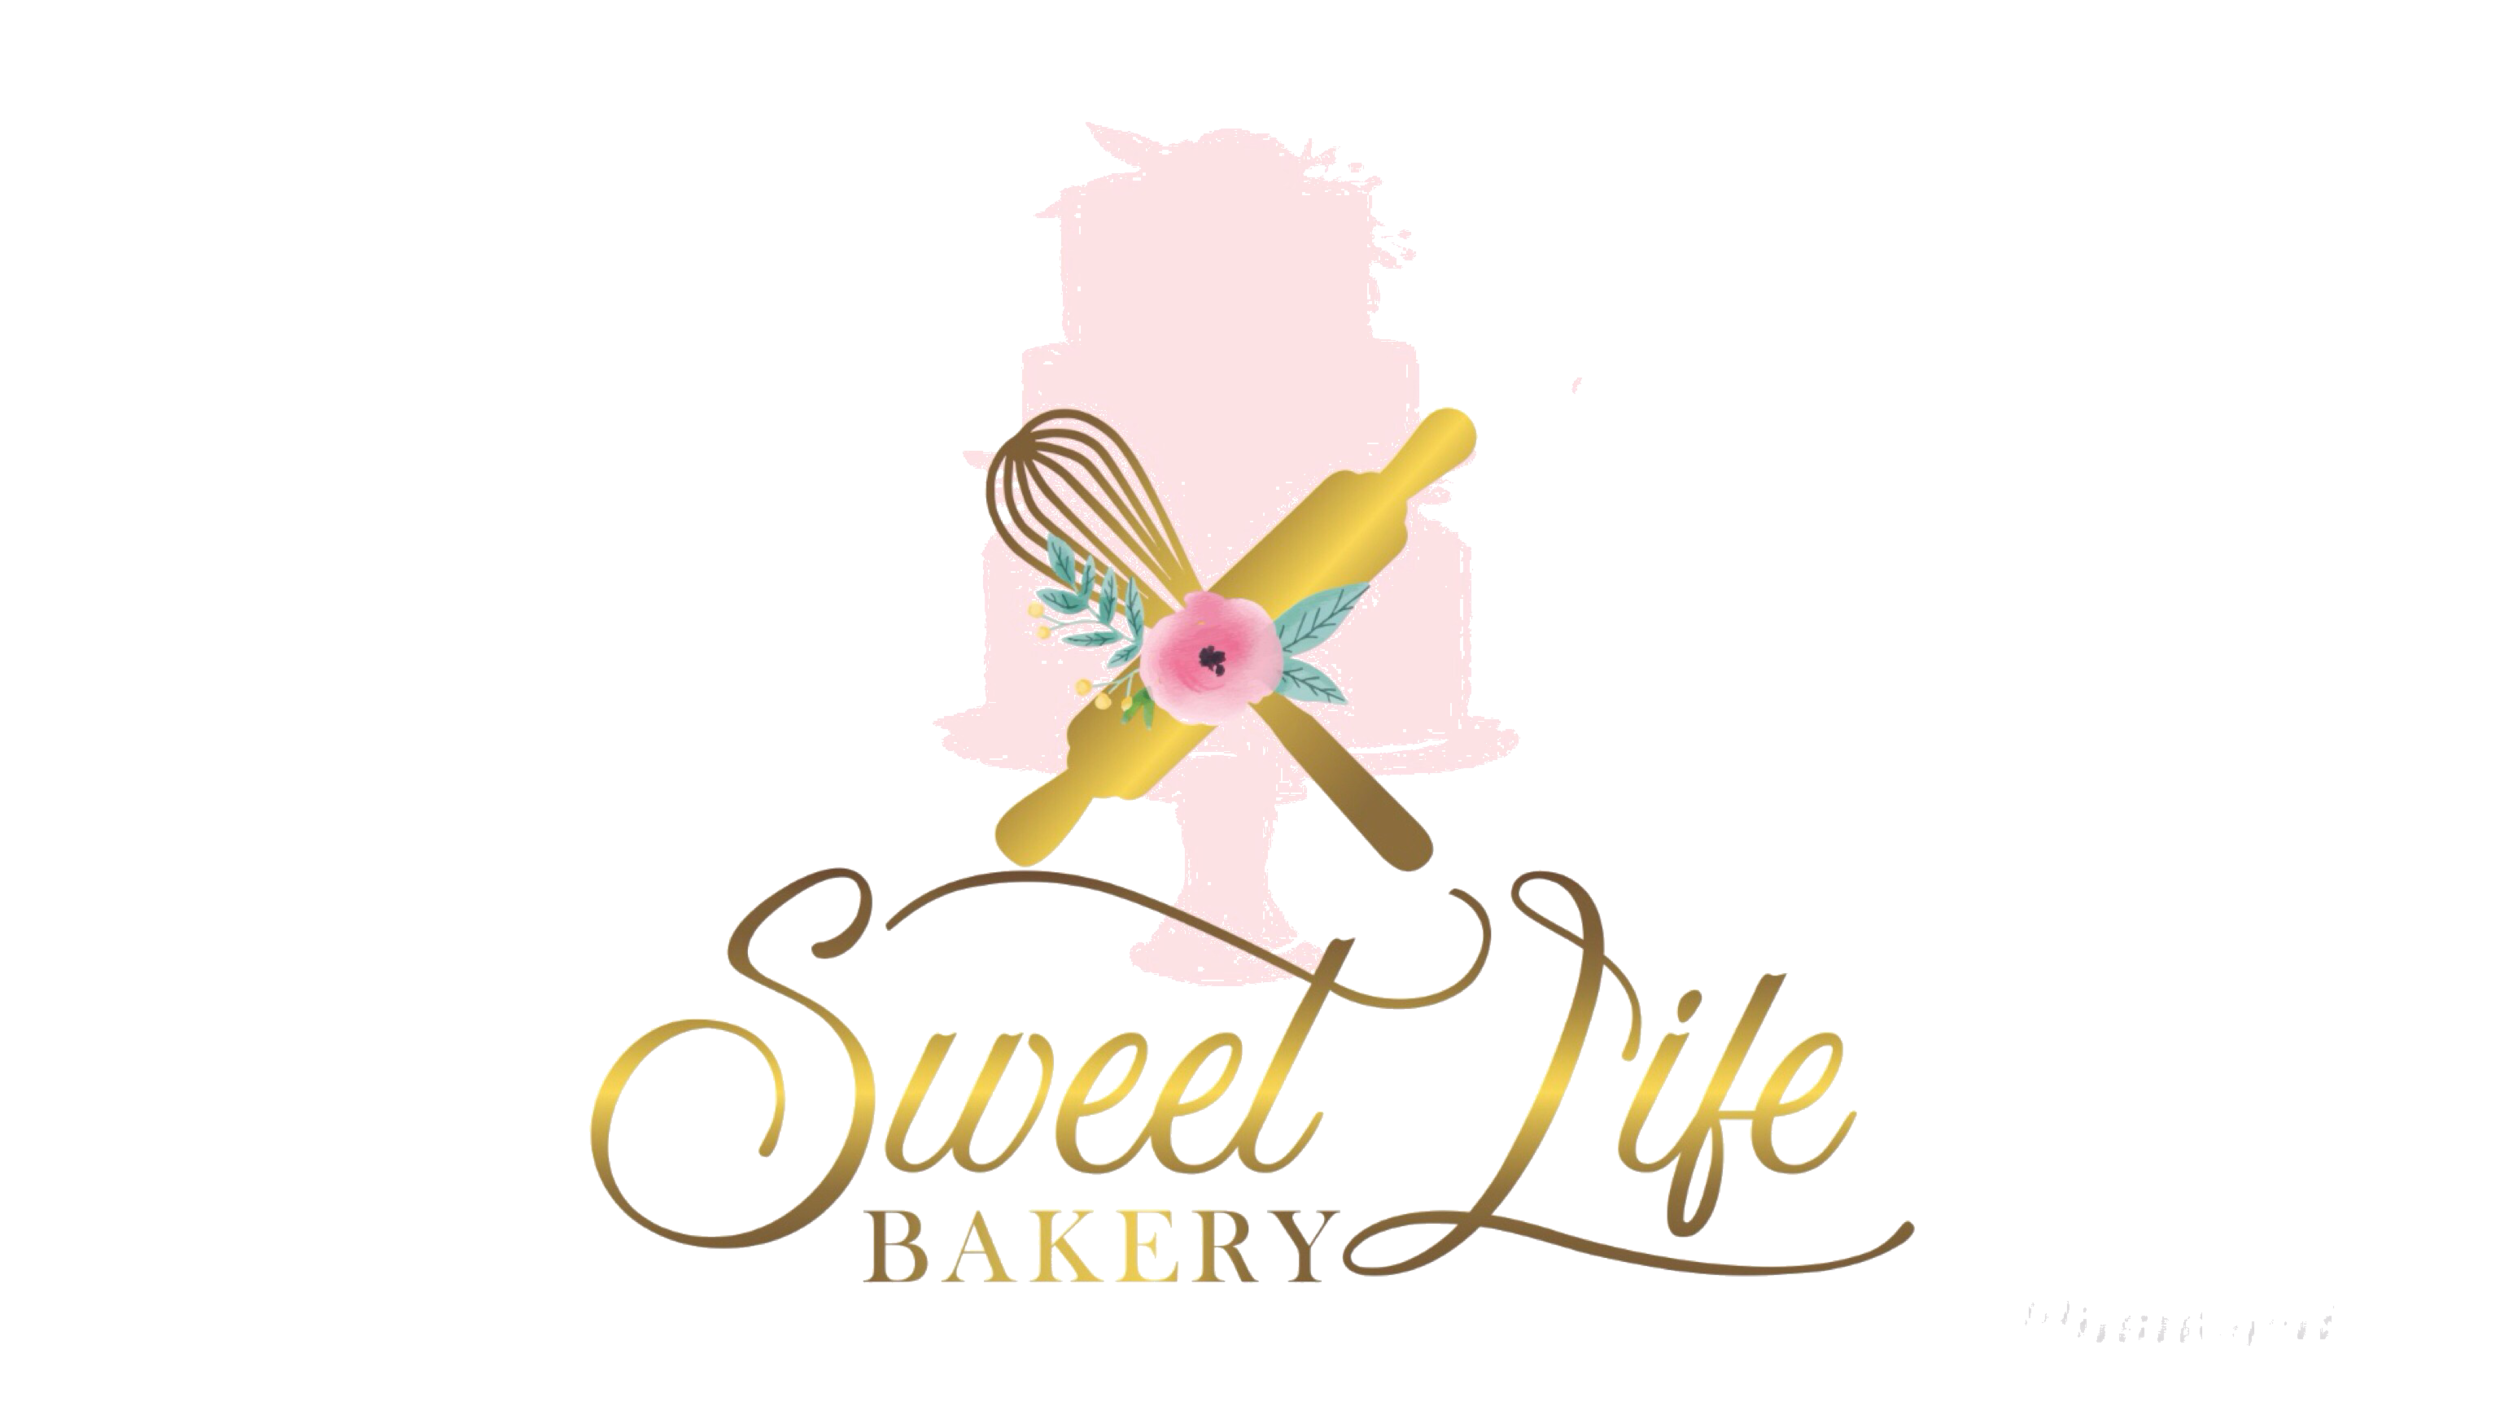 Sweetlife Bakery